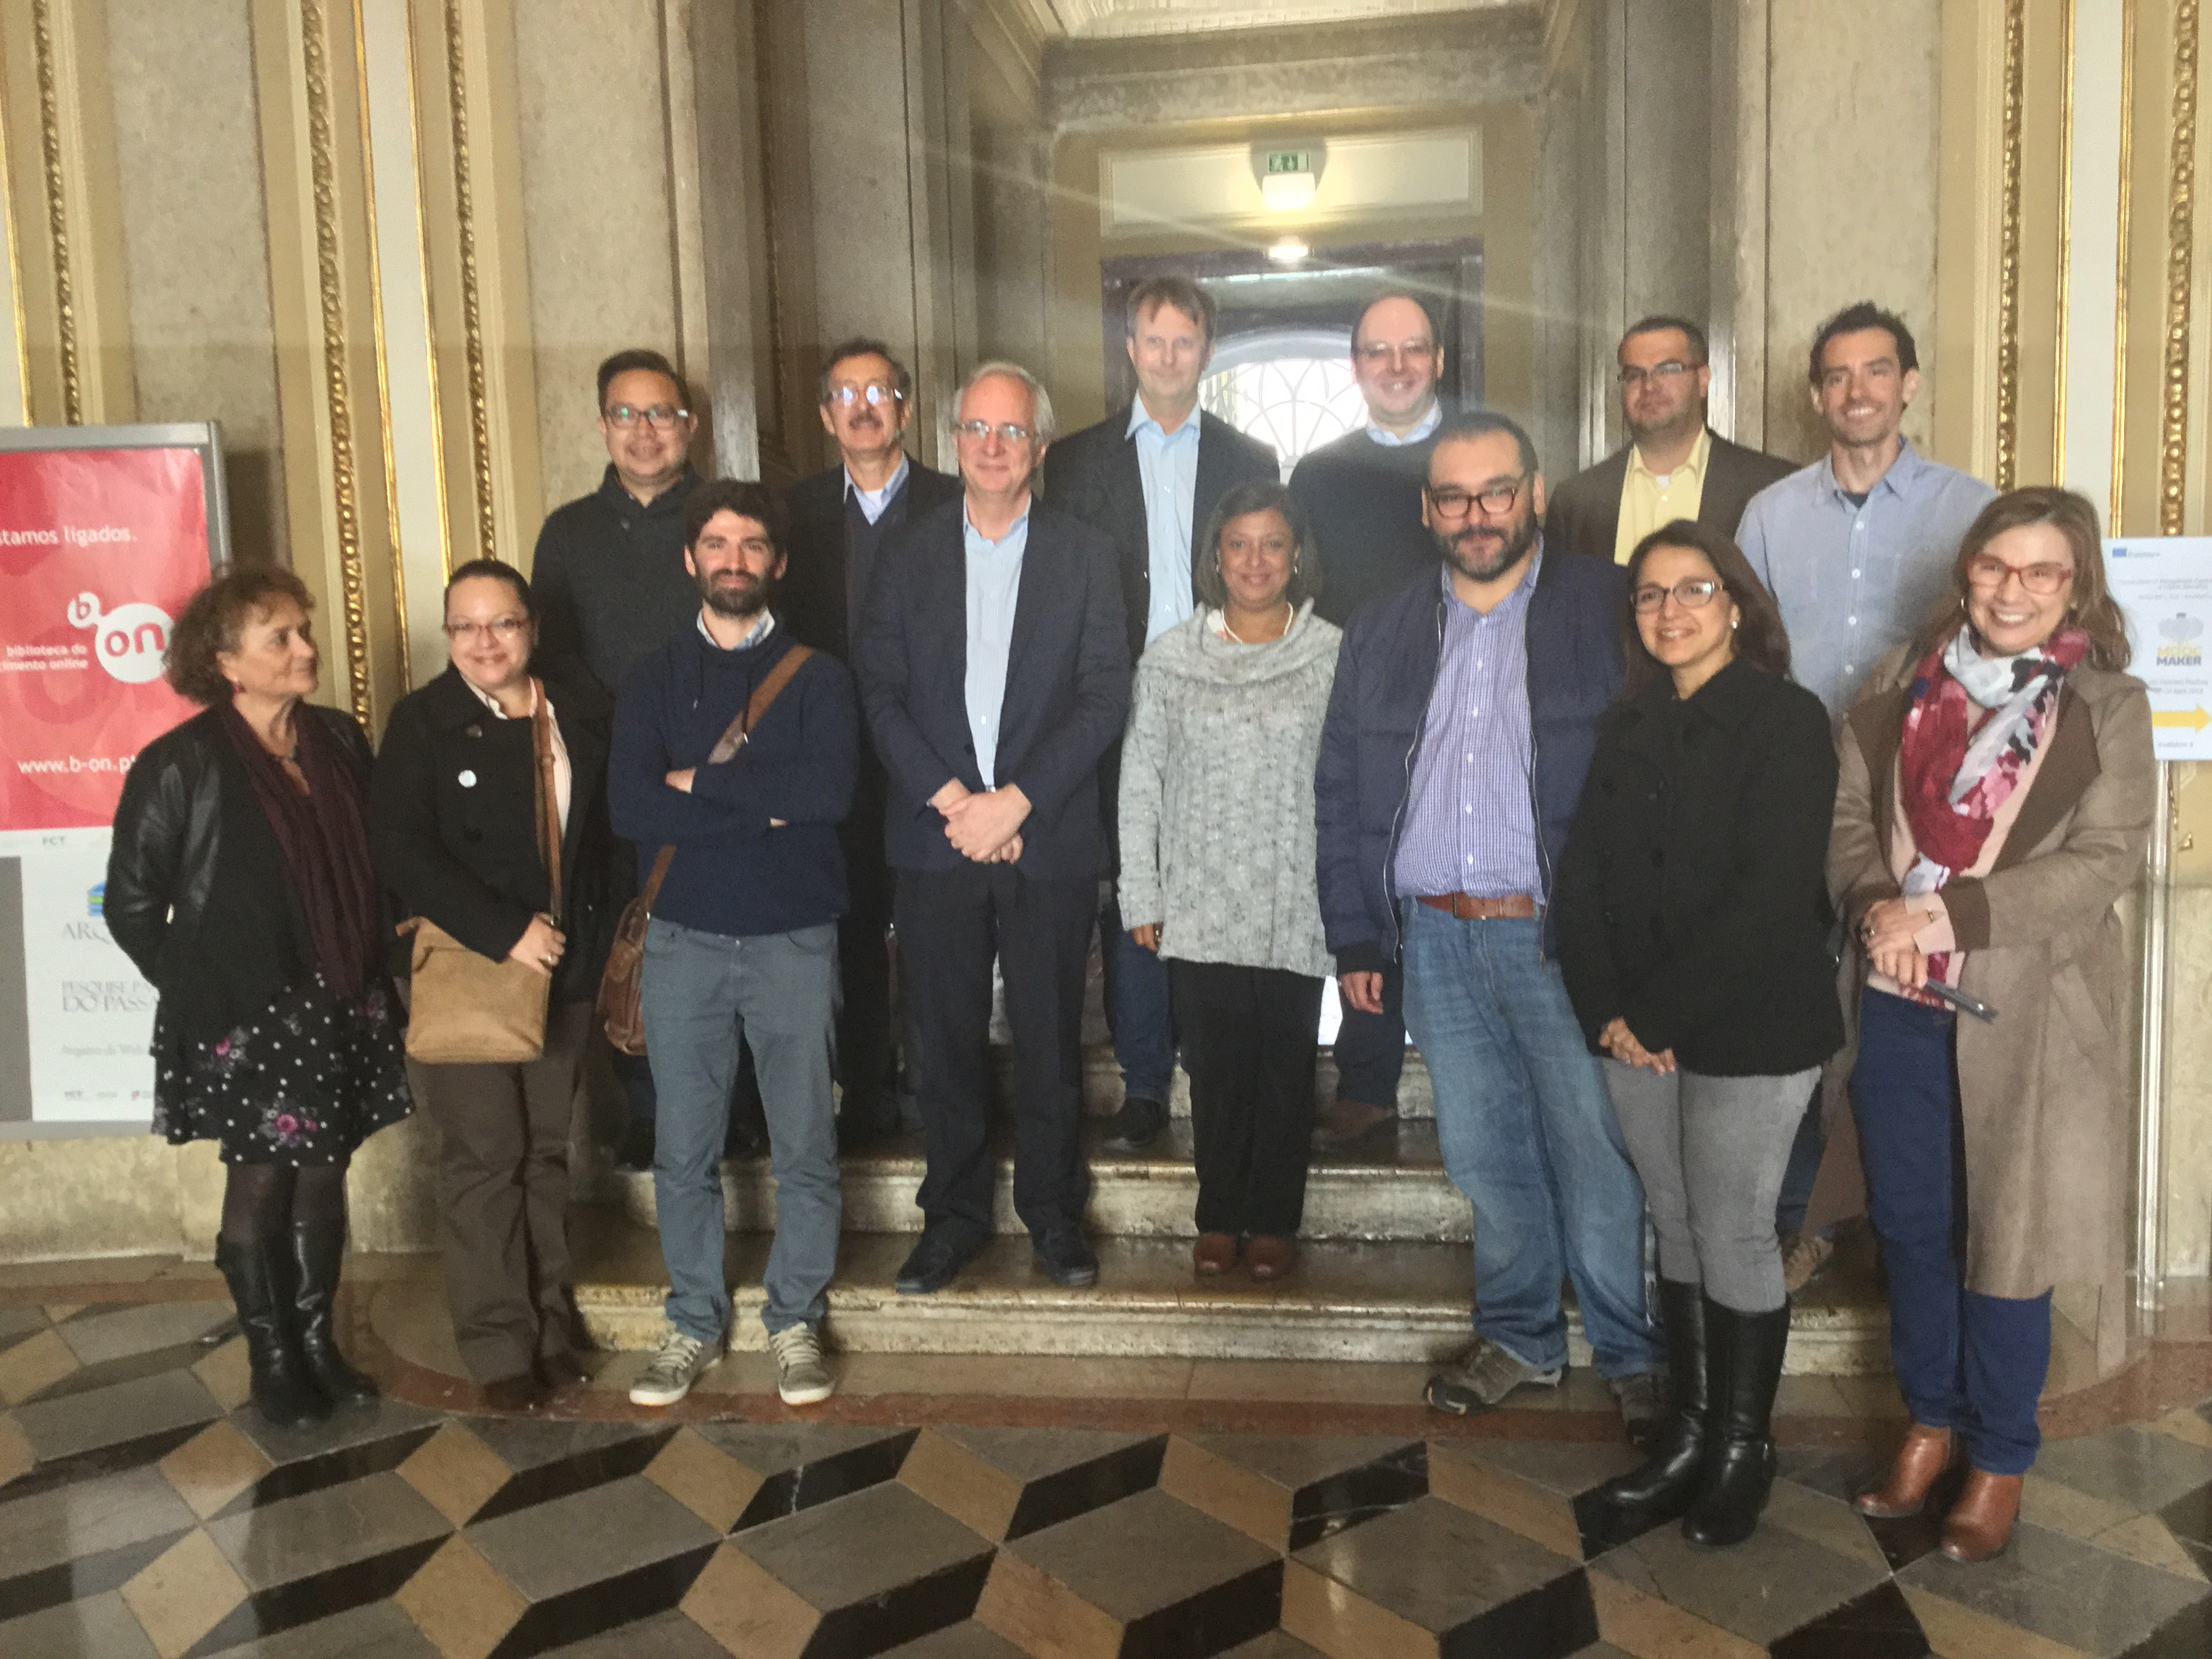 5th. Plenary meeting of MOOC-Maker partners in Lisbon, Portugal